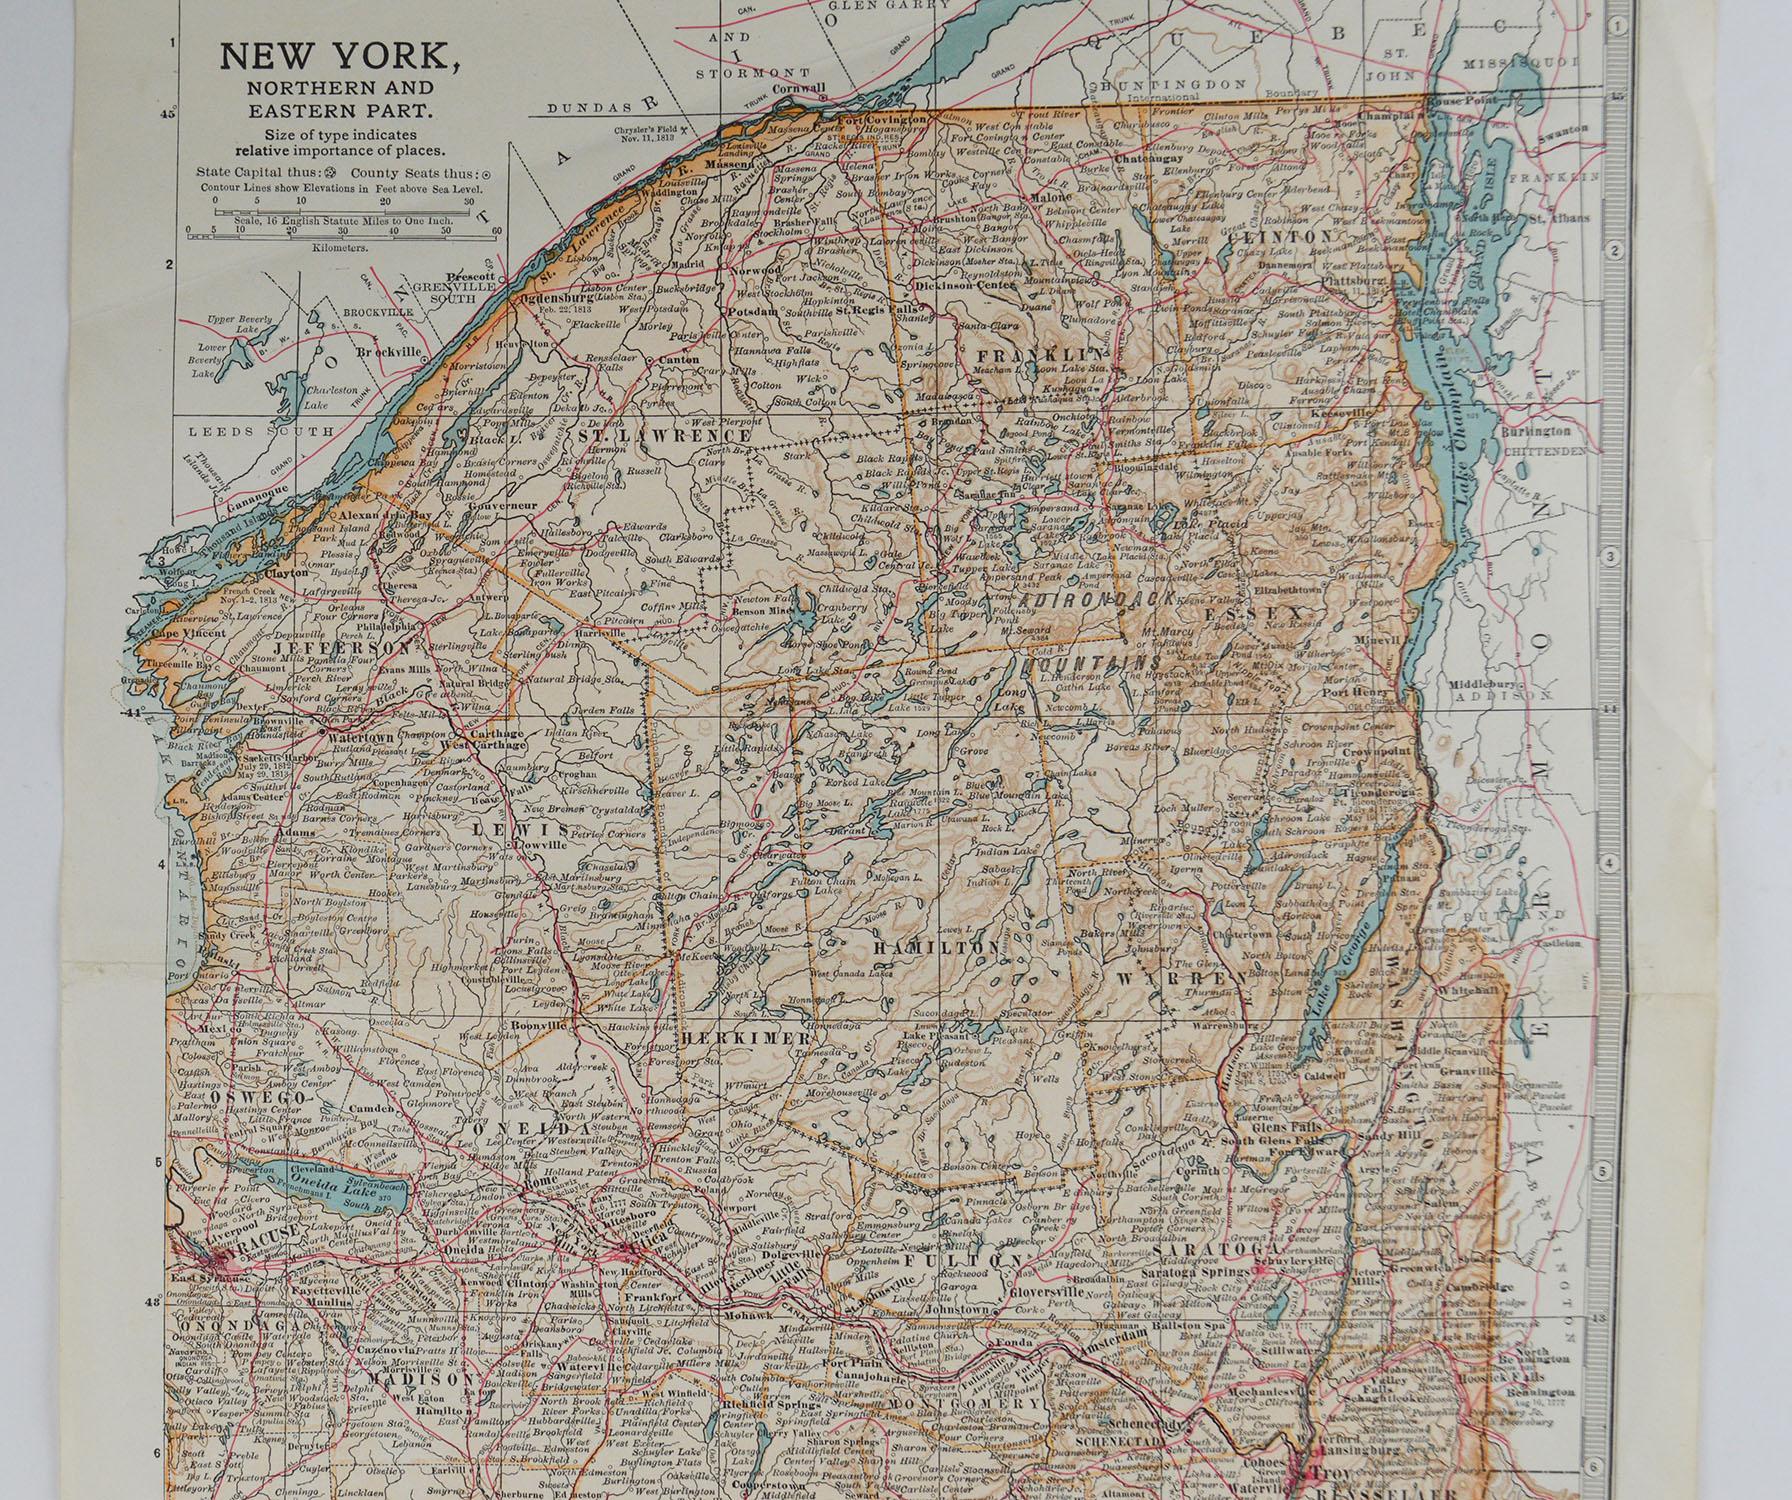 Other Original Antique Map of Upstate New York, circa 1890